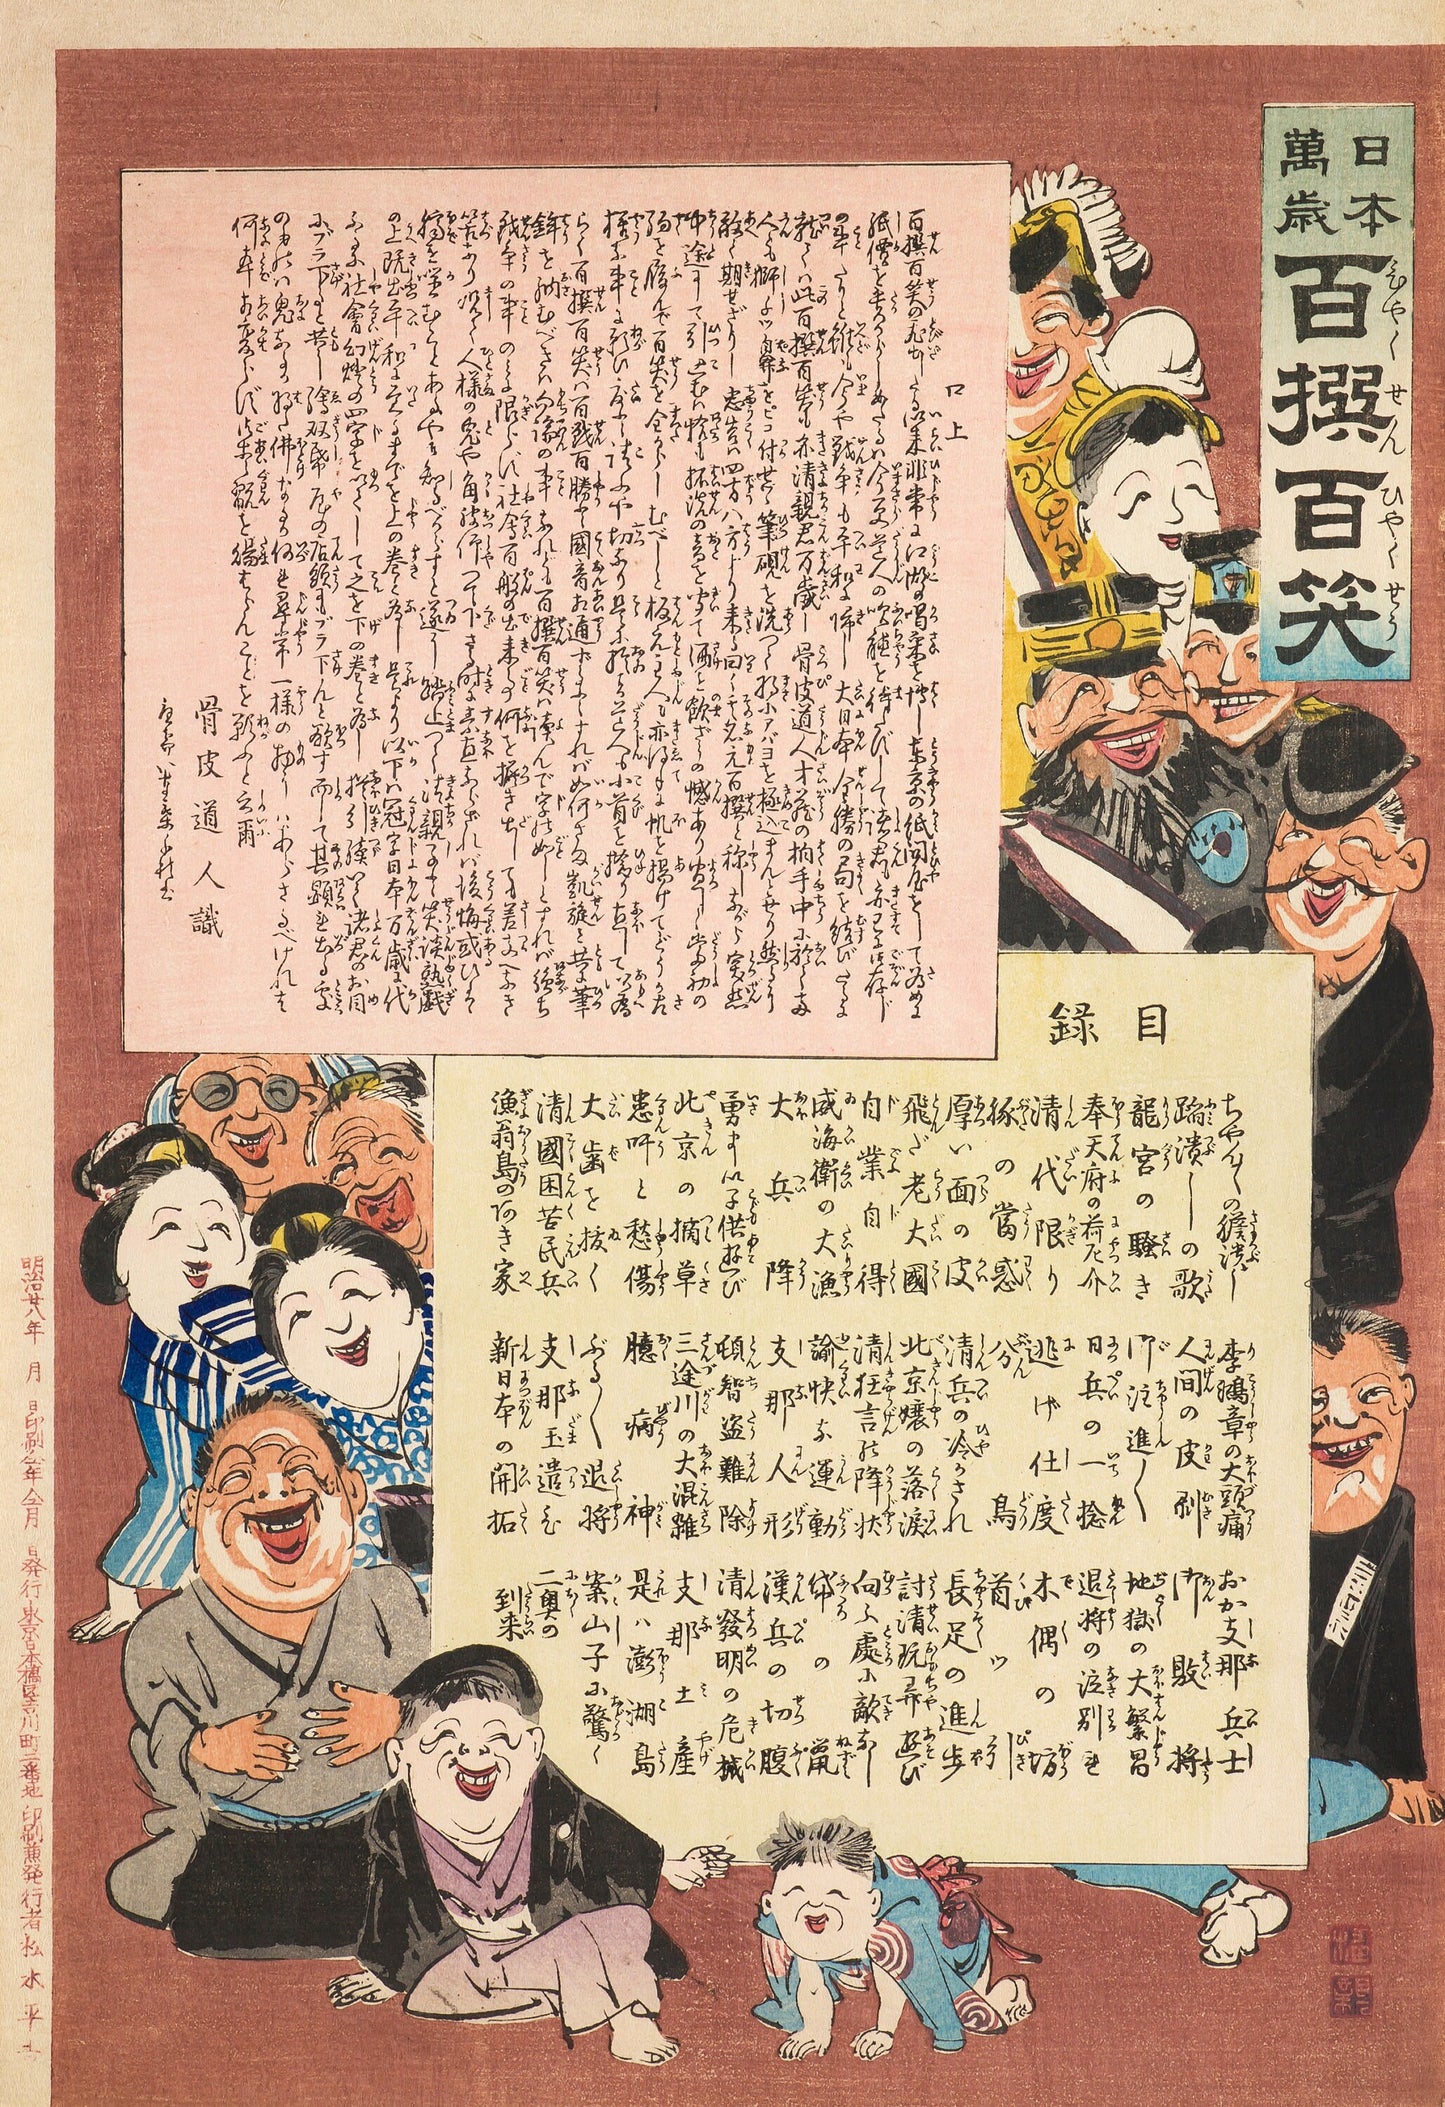 Kobayashi Kiyochika Ukiyo-e Cartoon Woodblock Prints [10 Images]